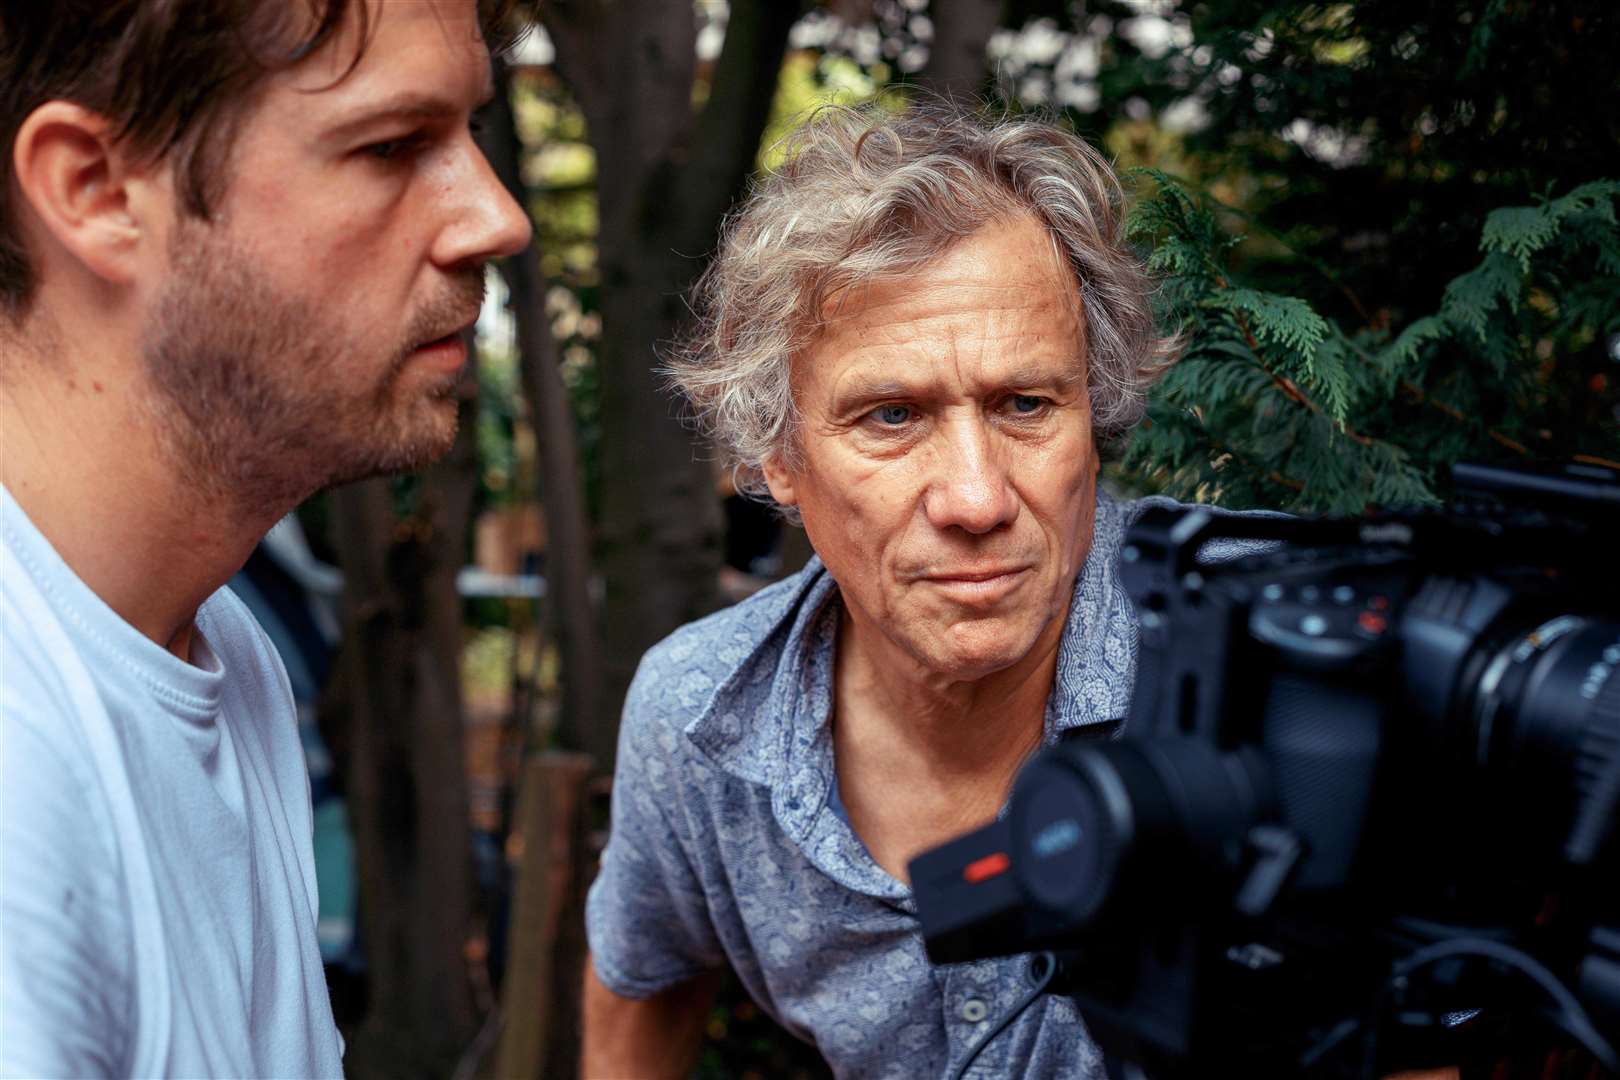 Peter Duncan with cameraman Luke Roberts on set in his garden